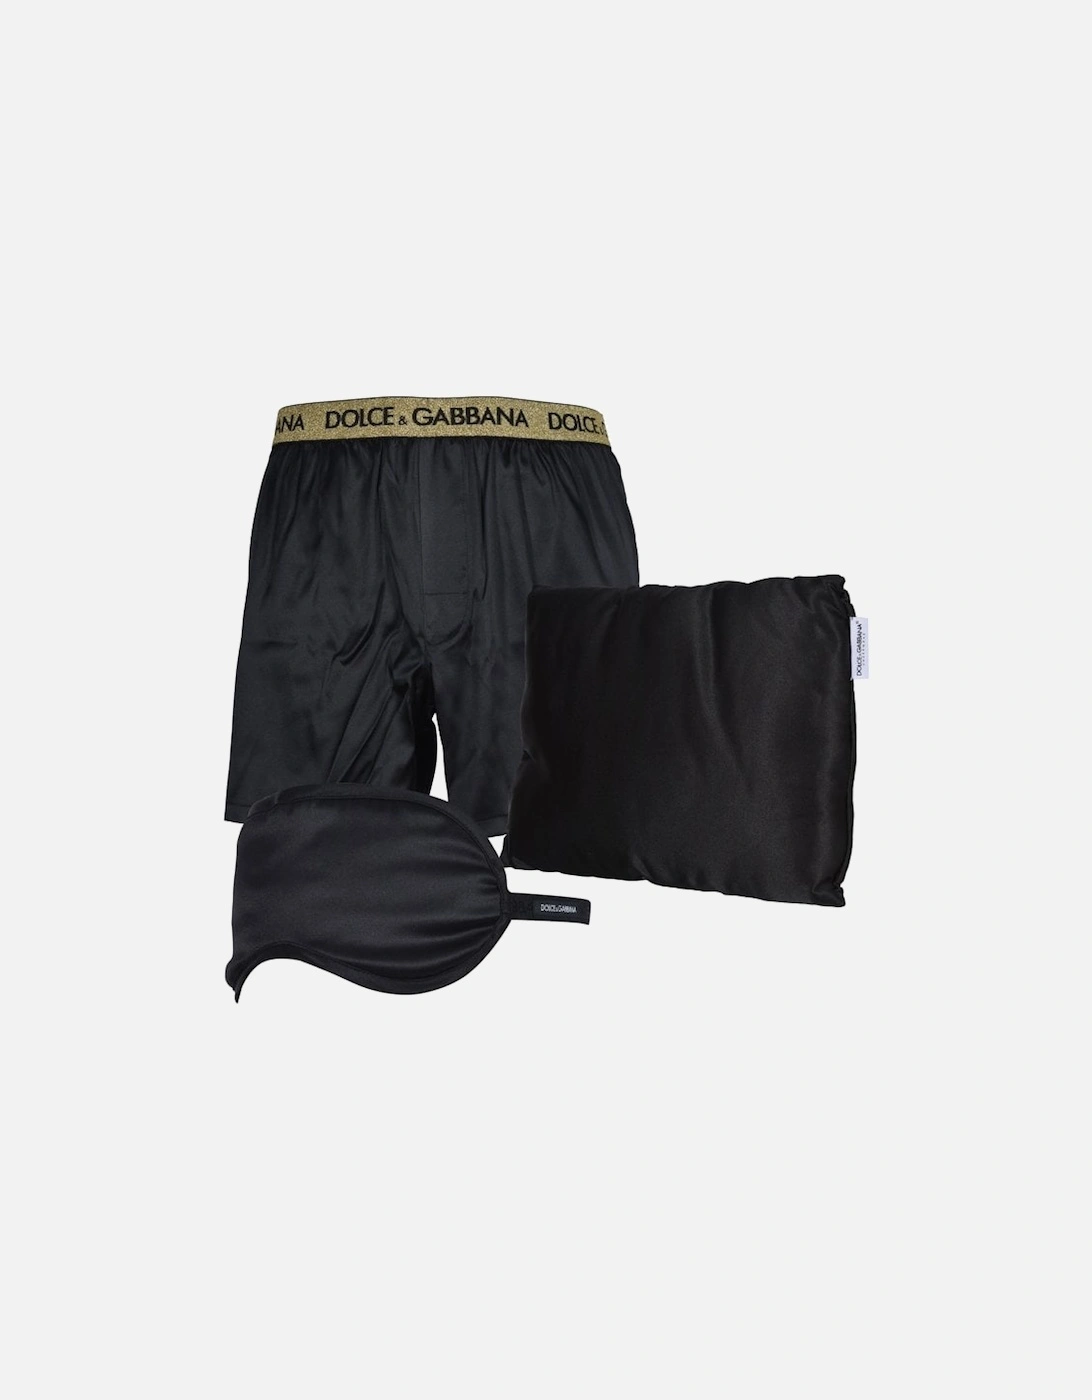 Magnificent Logo Silk Boxer Shorts Gift Set w/eye mask, Black/gold